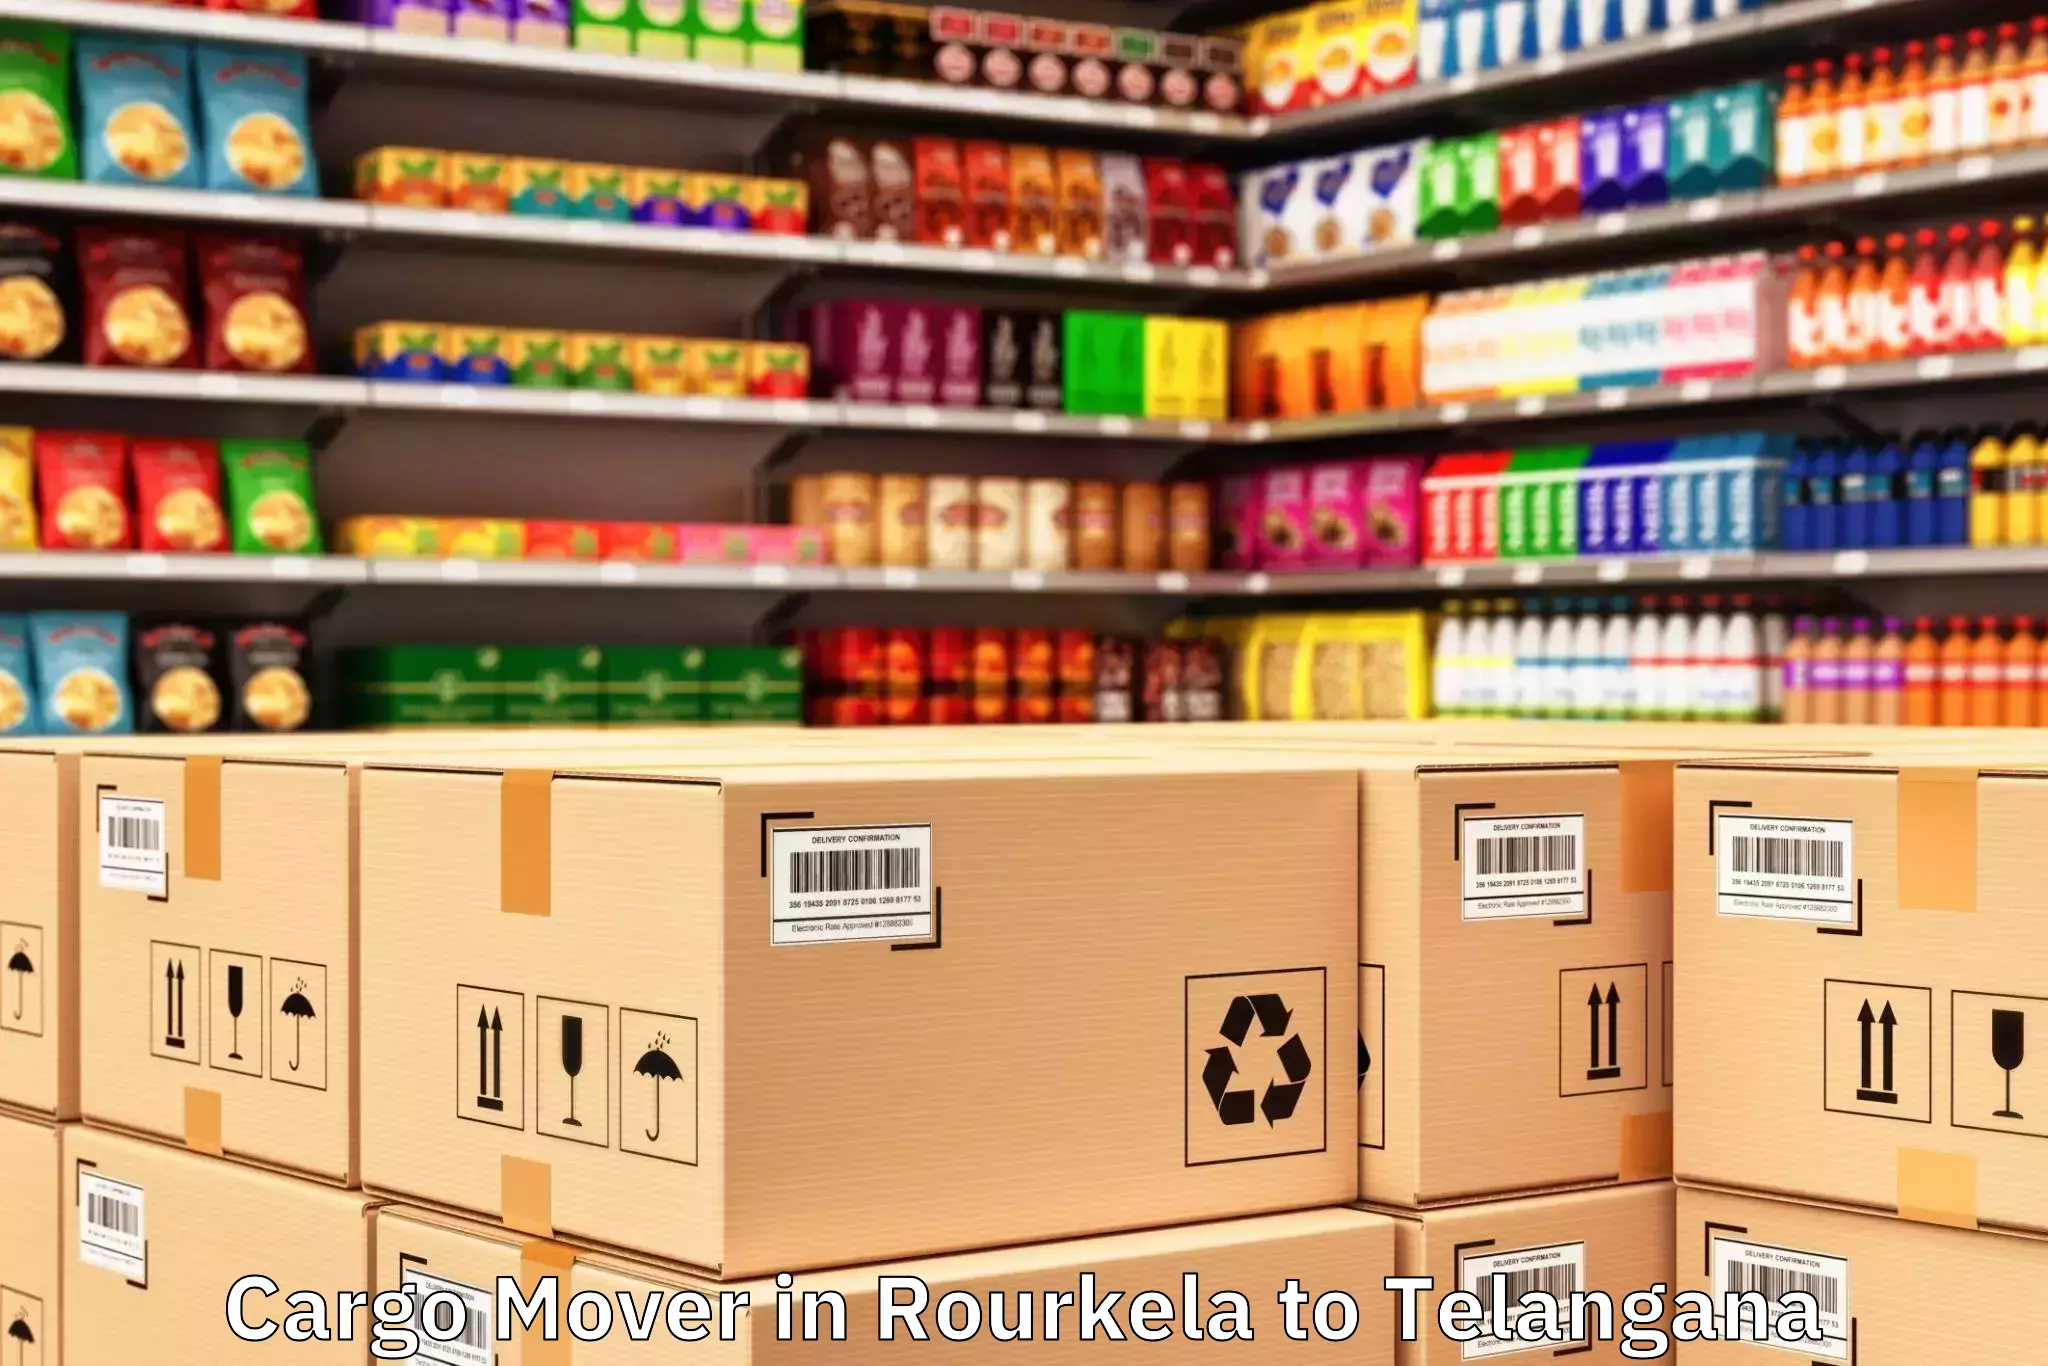 Top Rourkela to Hanamkonda Cargo Mover Available